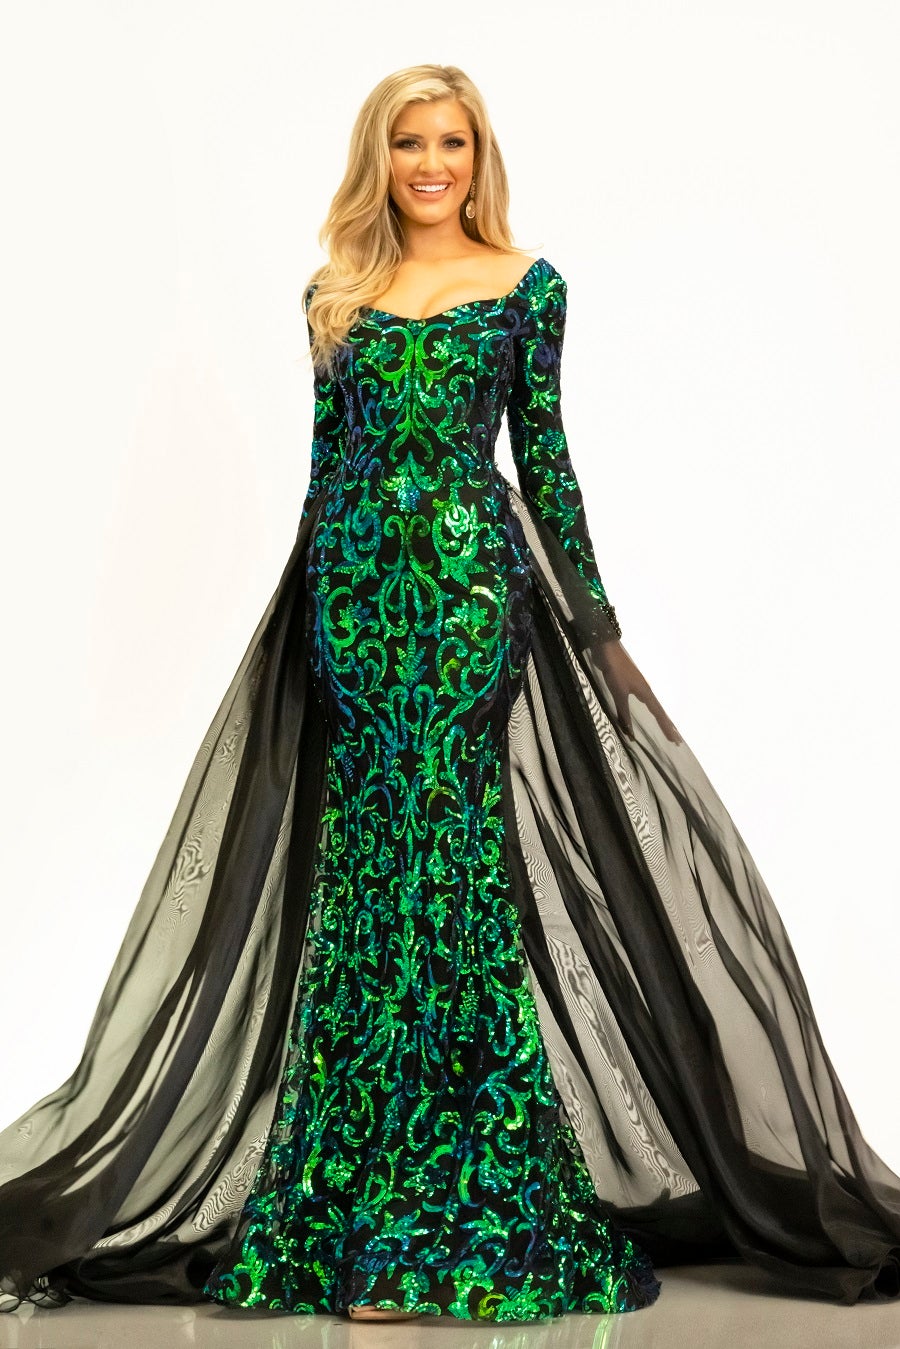 Johnathan-Kayne-2334-mermaid-black-pageant-dress-front-long-sleeves-embellished-overskirt